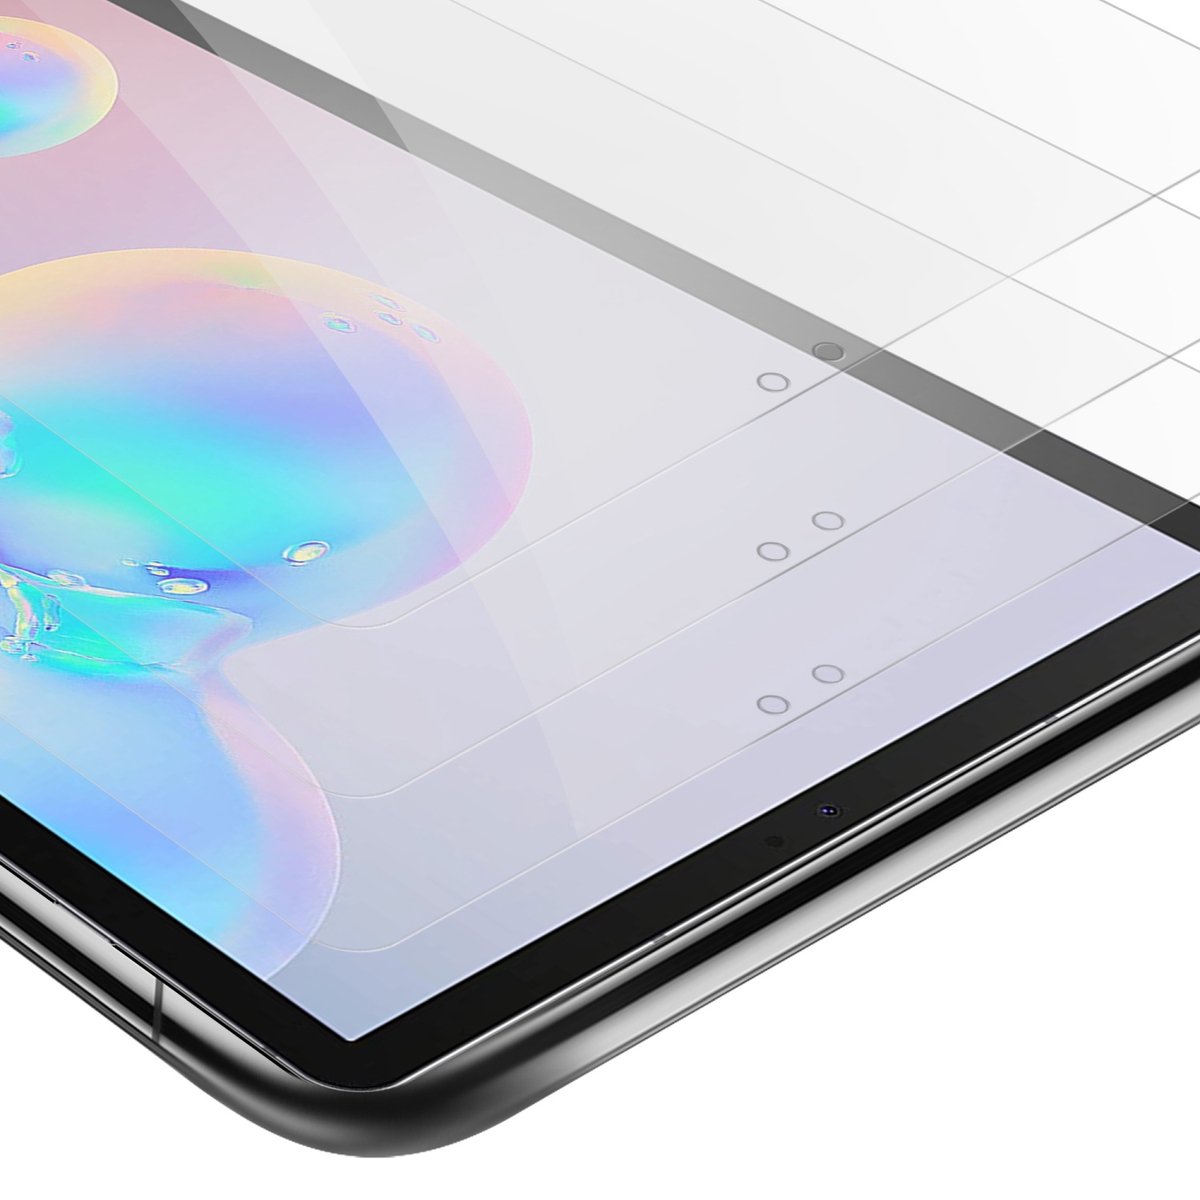 Cadorabo 3x Screenprotector voor Samsung Galaxy Tab S6 (10.5 inch) in KRISTALHELDER - Getemperd Pantser Film (Tempered) Display beschermend glas in 9H hardheid met 3D Touch